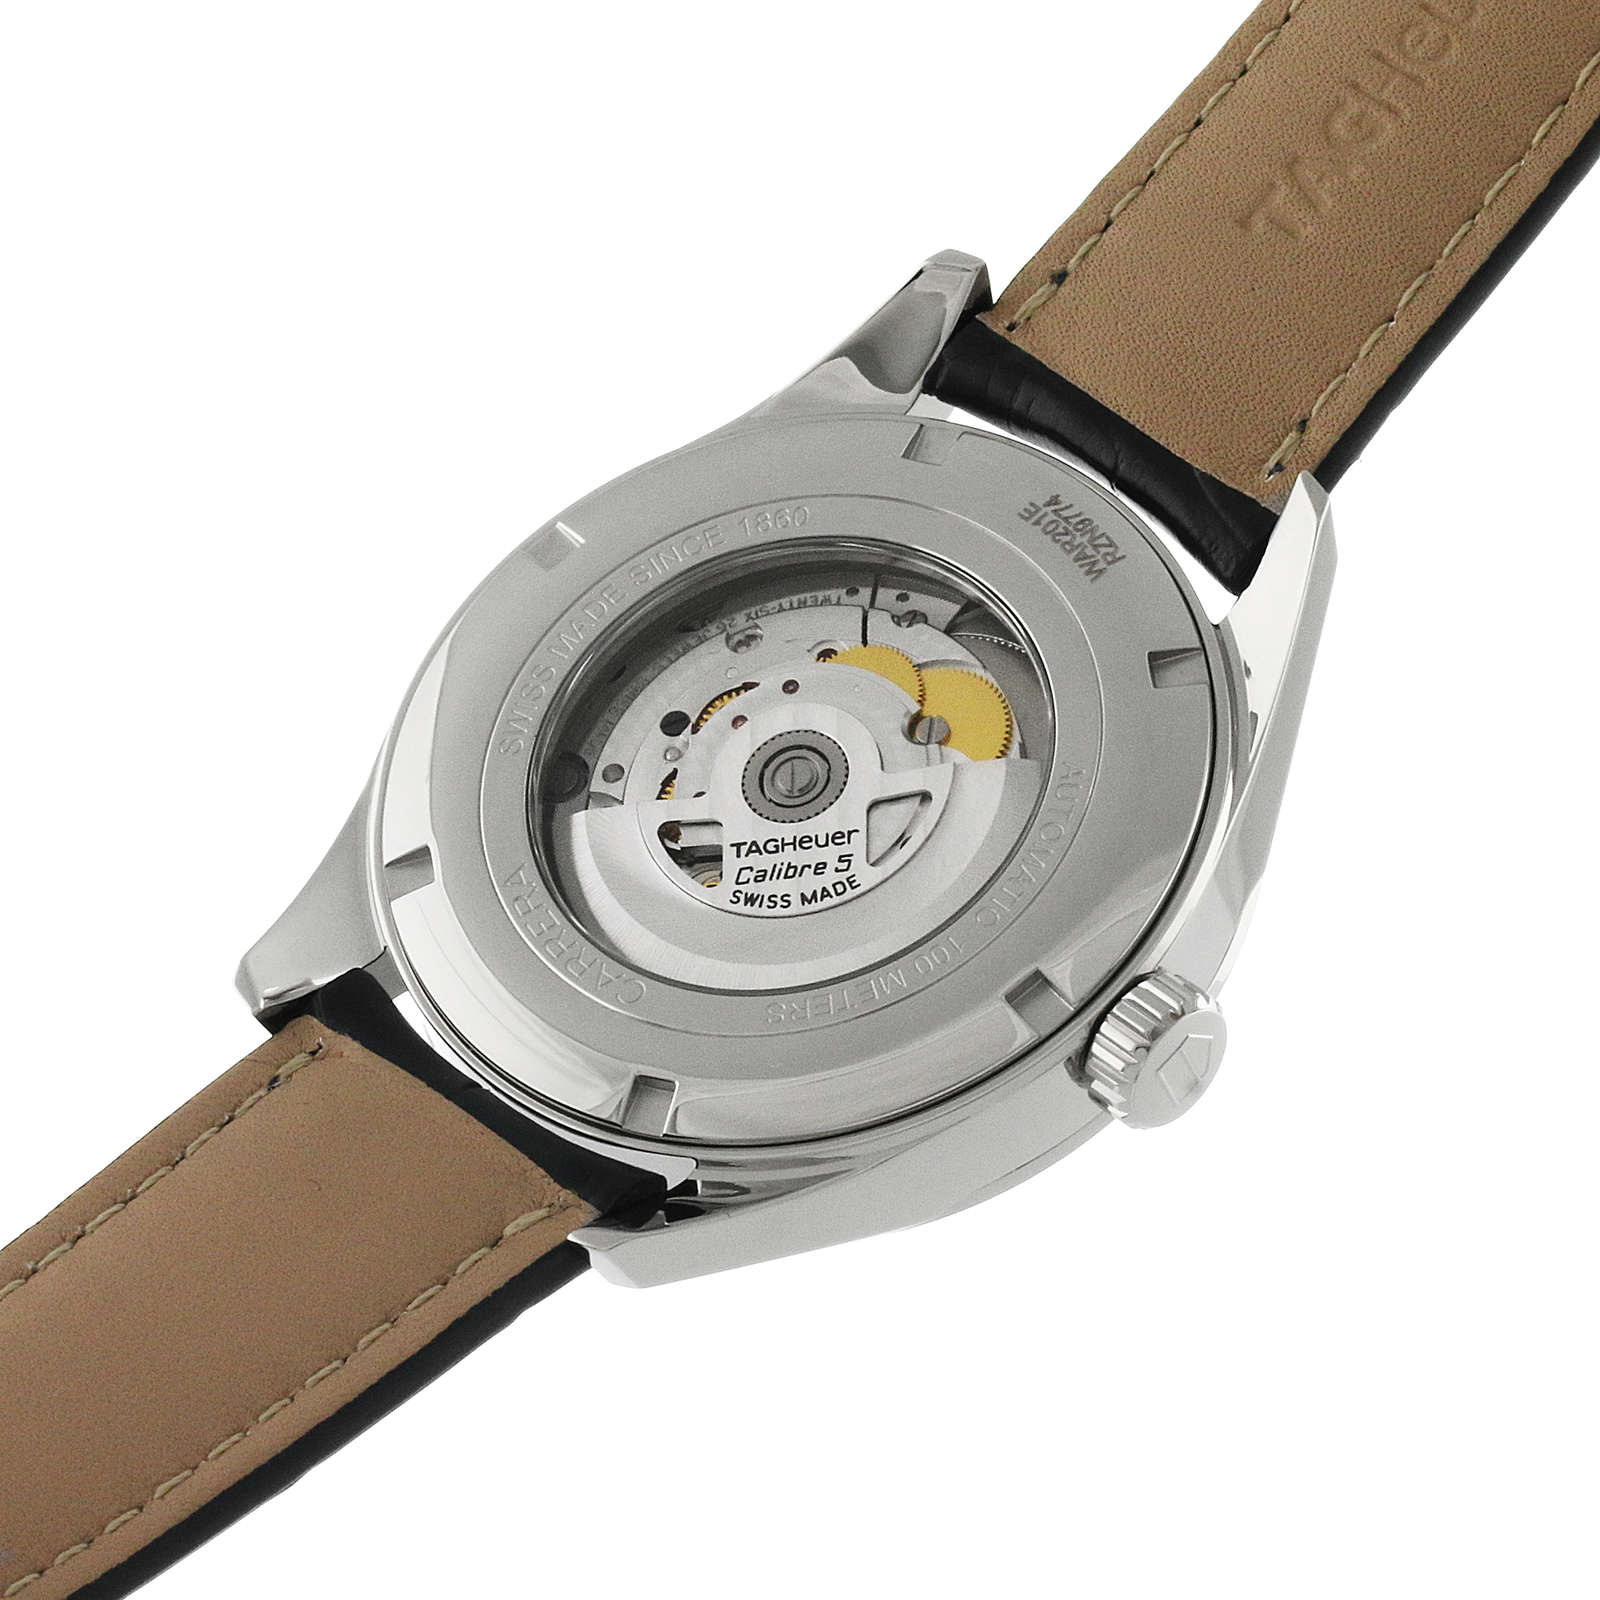 calibre watches of switzerland